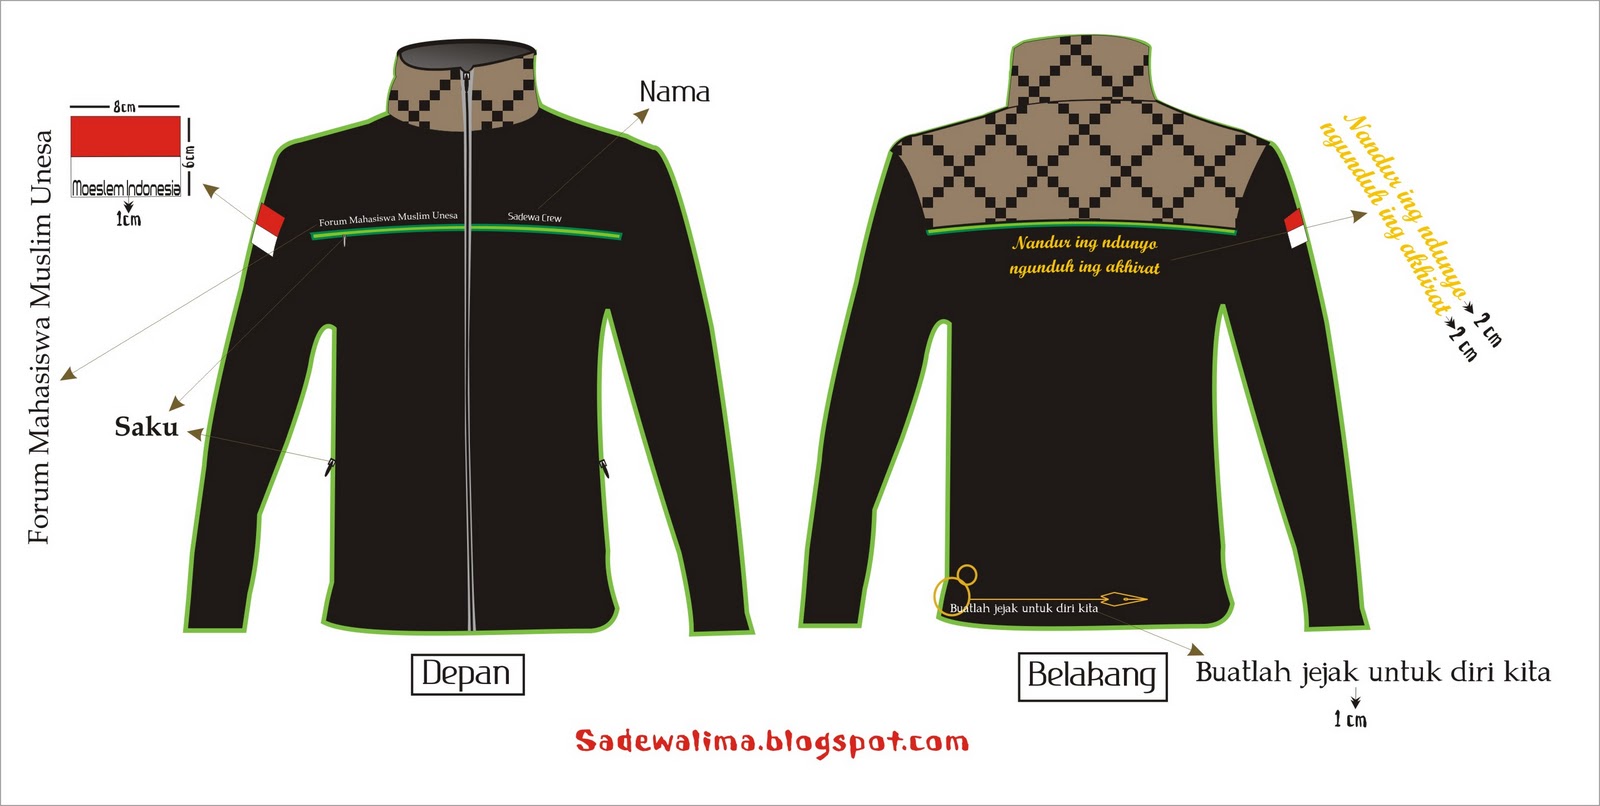 Sadewa: desain jacket